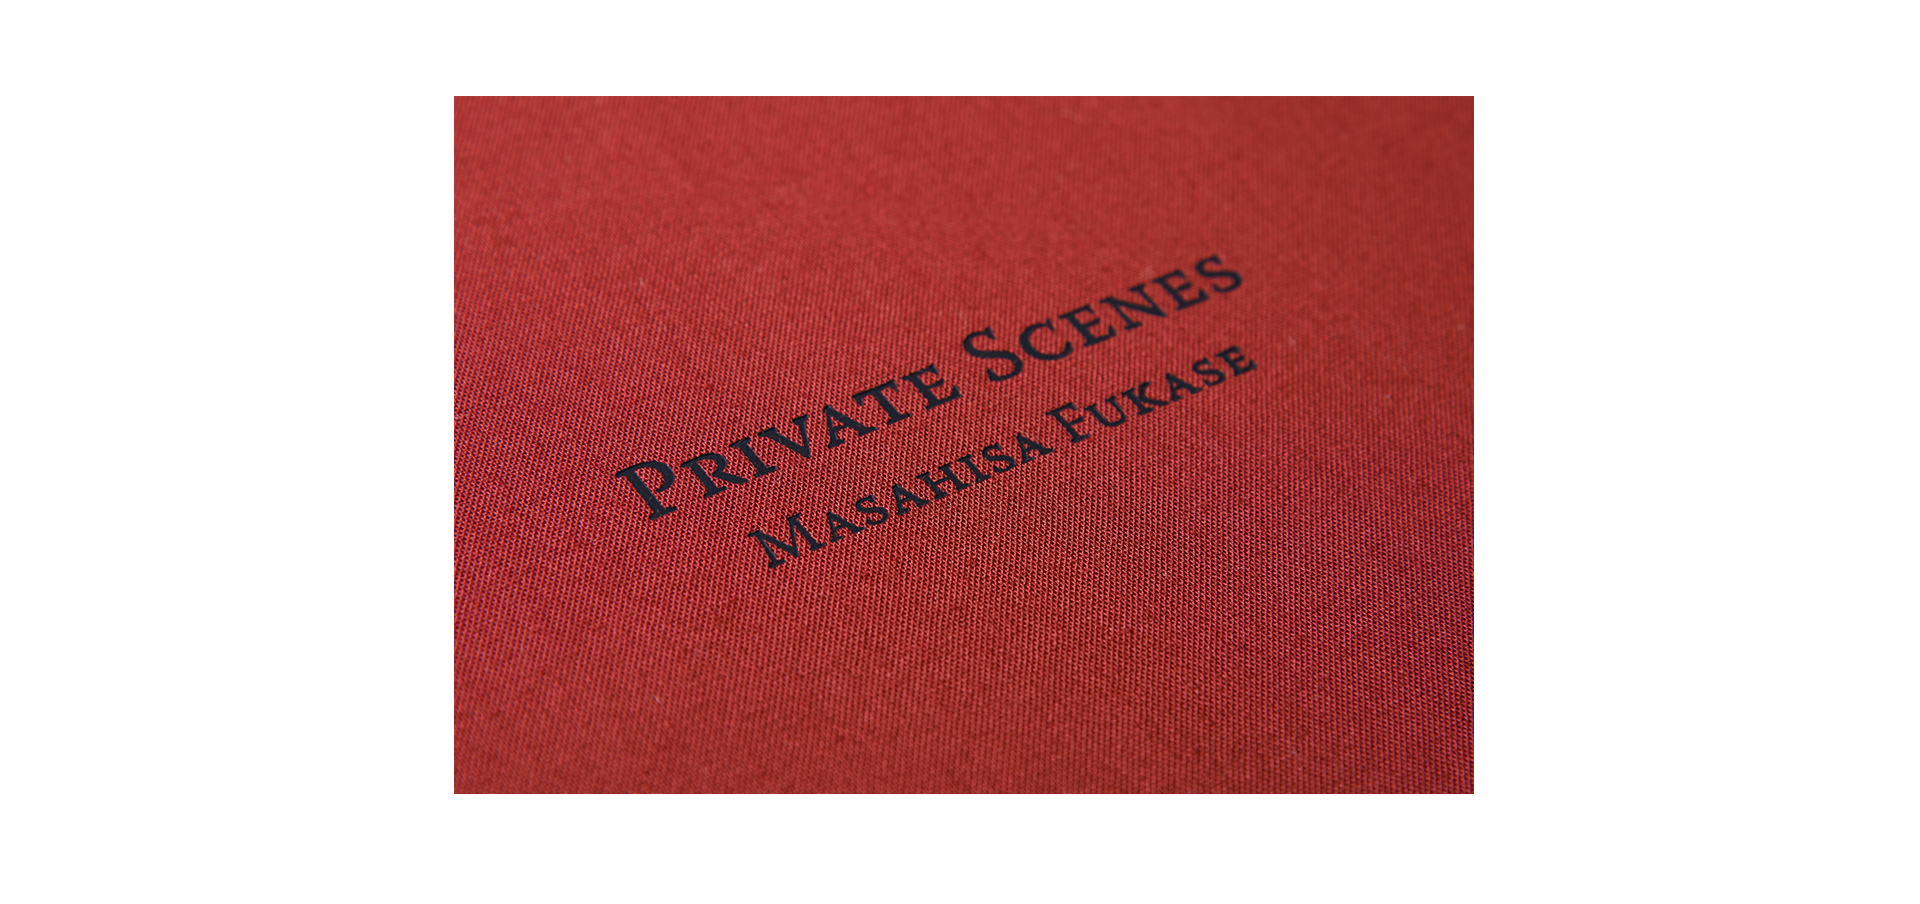 Masahisa Fukase Portfolio - Private Scenes